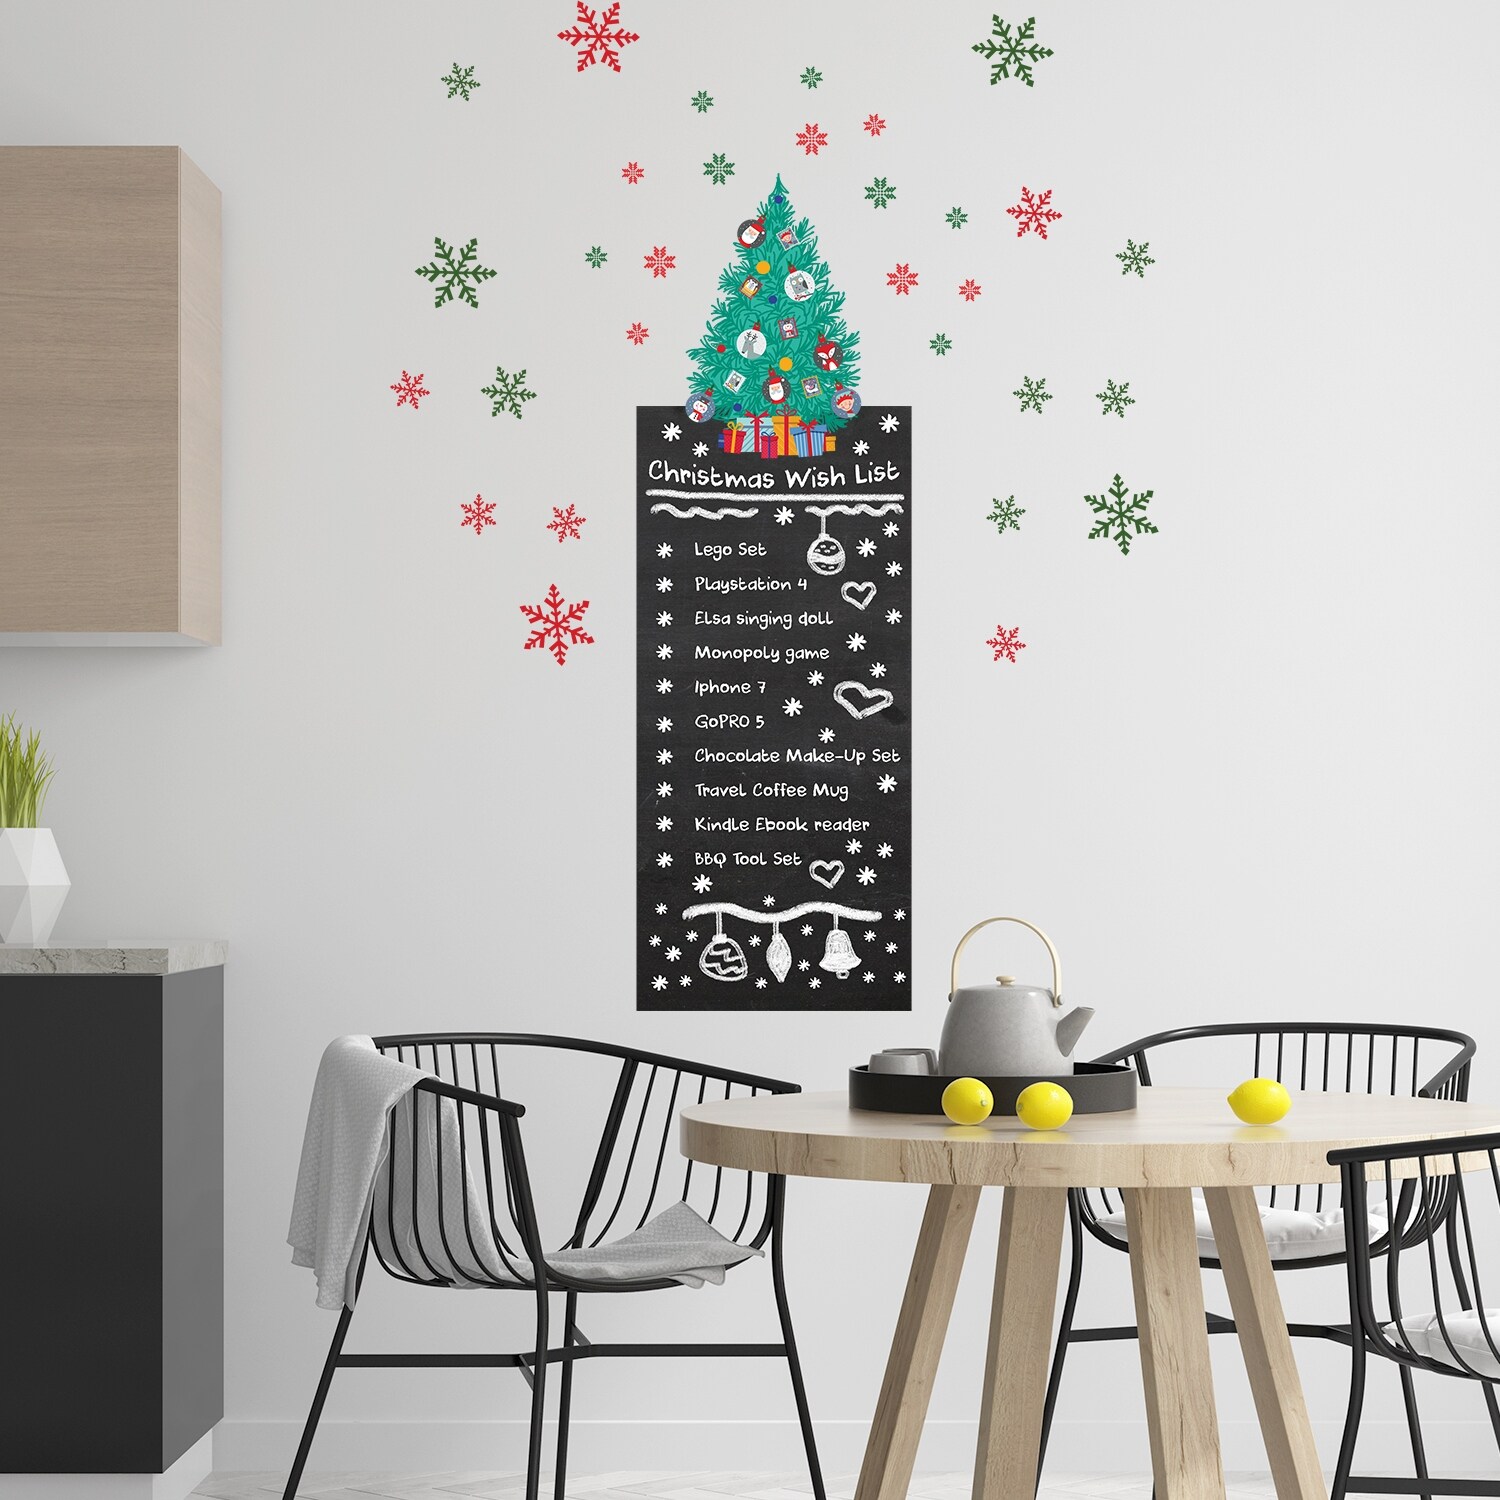 Walplus Santa's Sleigh Colorful Snowflakes Wall Sticker DIY Home